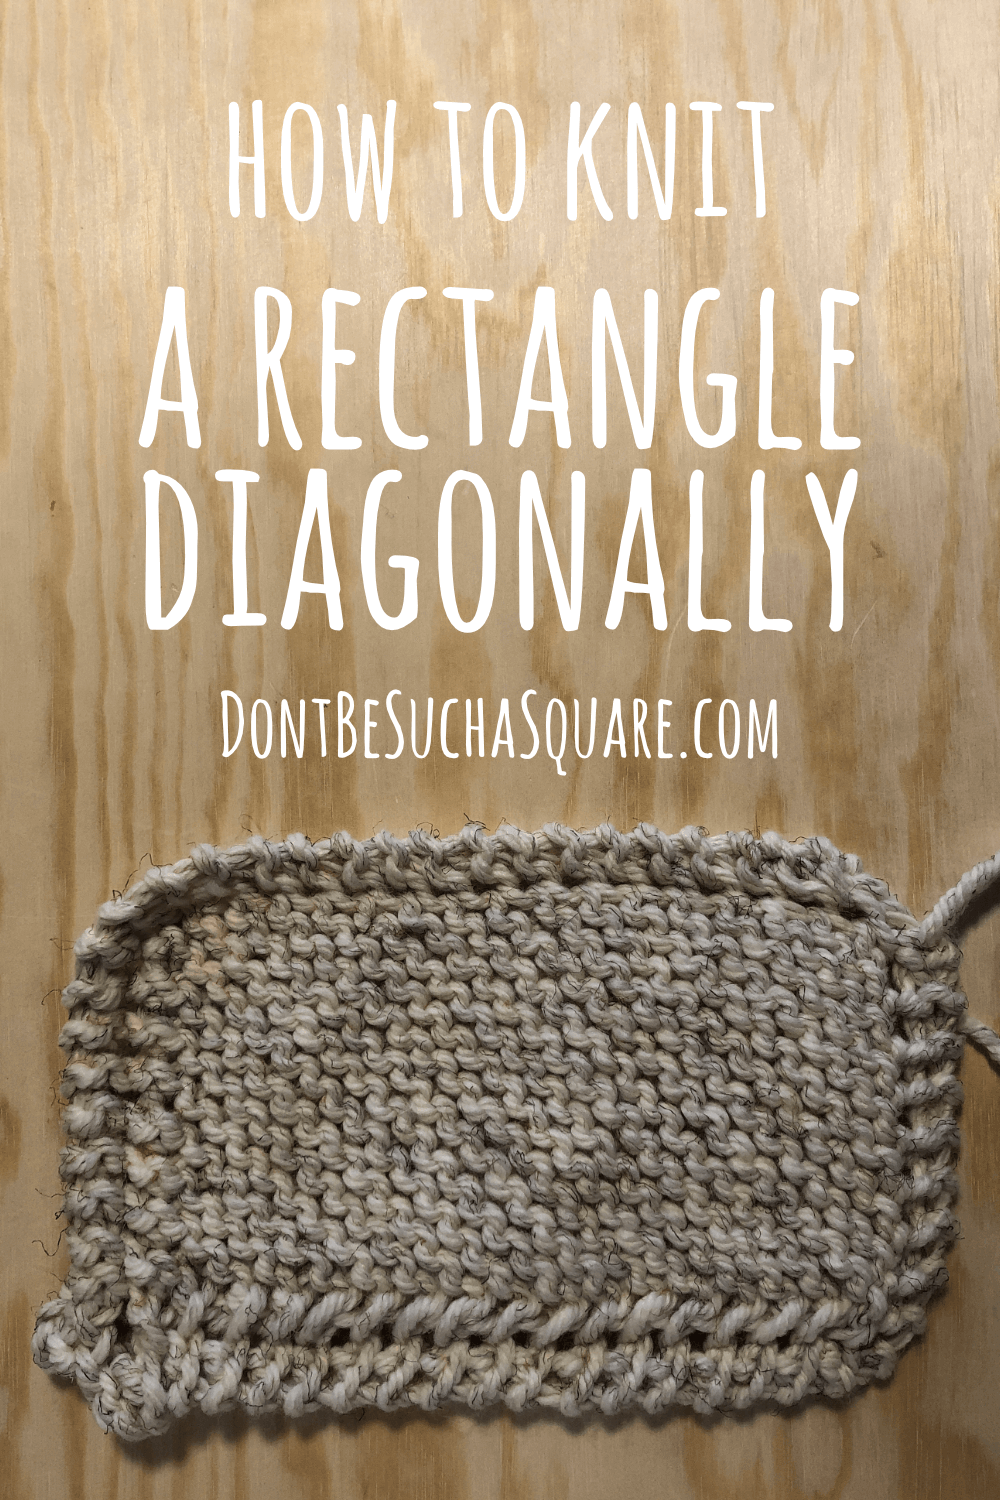 How to Needle Knit Grandma's Rectangle Blanket (C2C) - GoodKnit Kisses